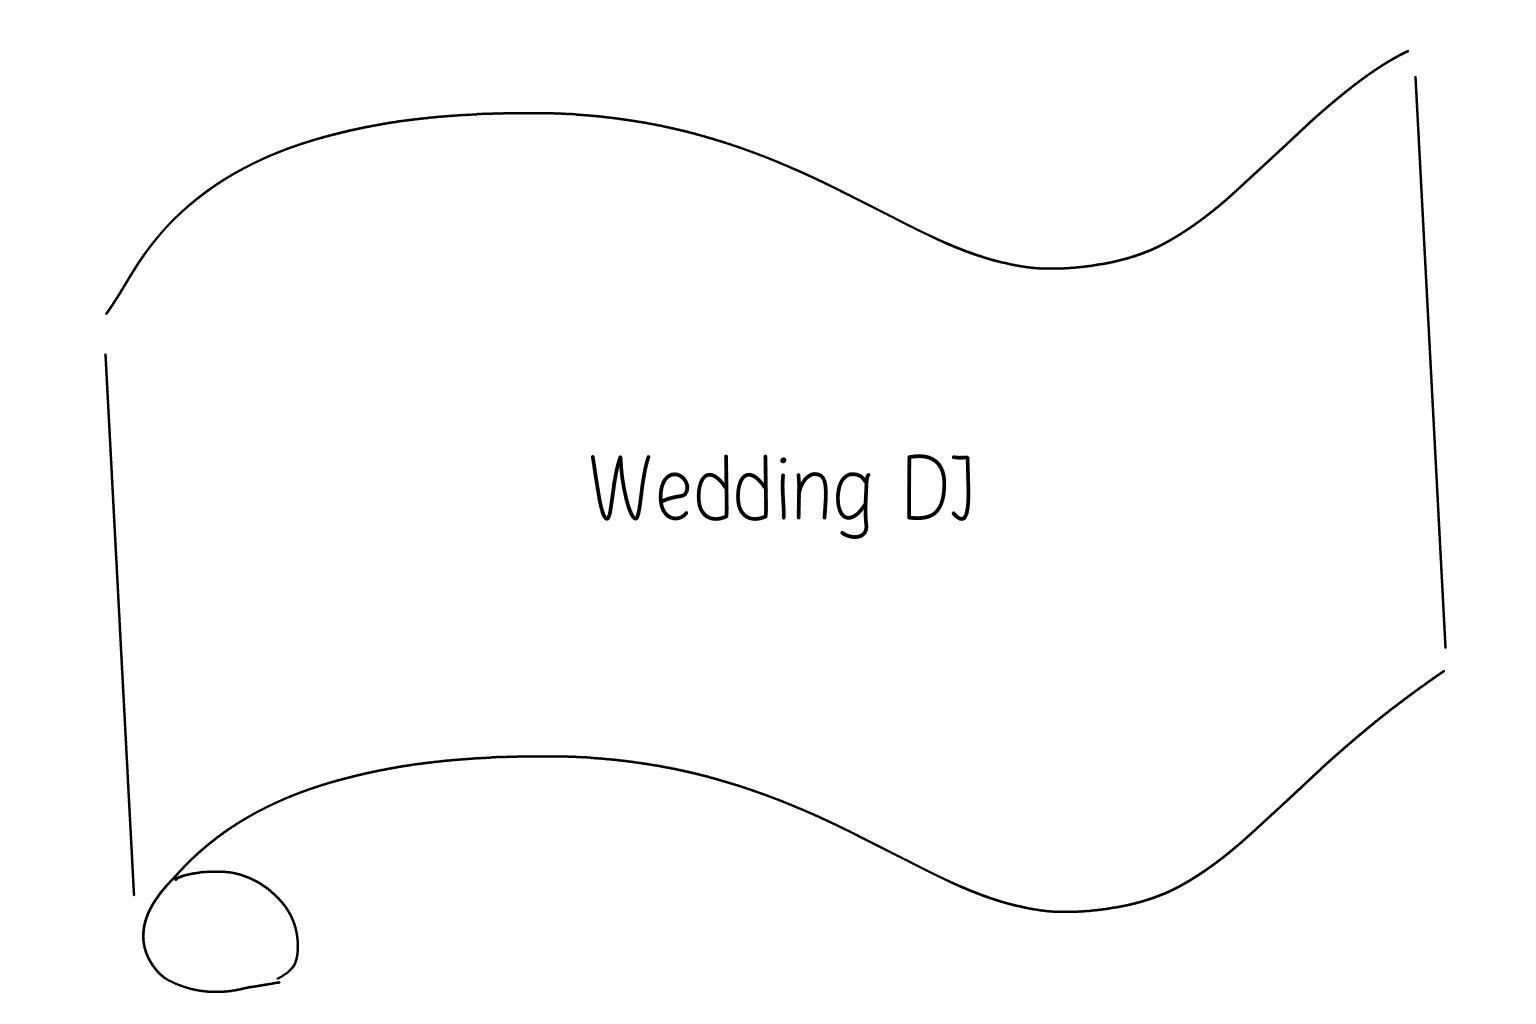 Illustration of wedding DJ